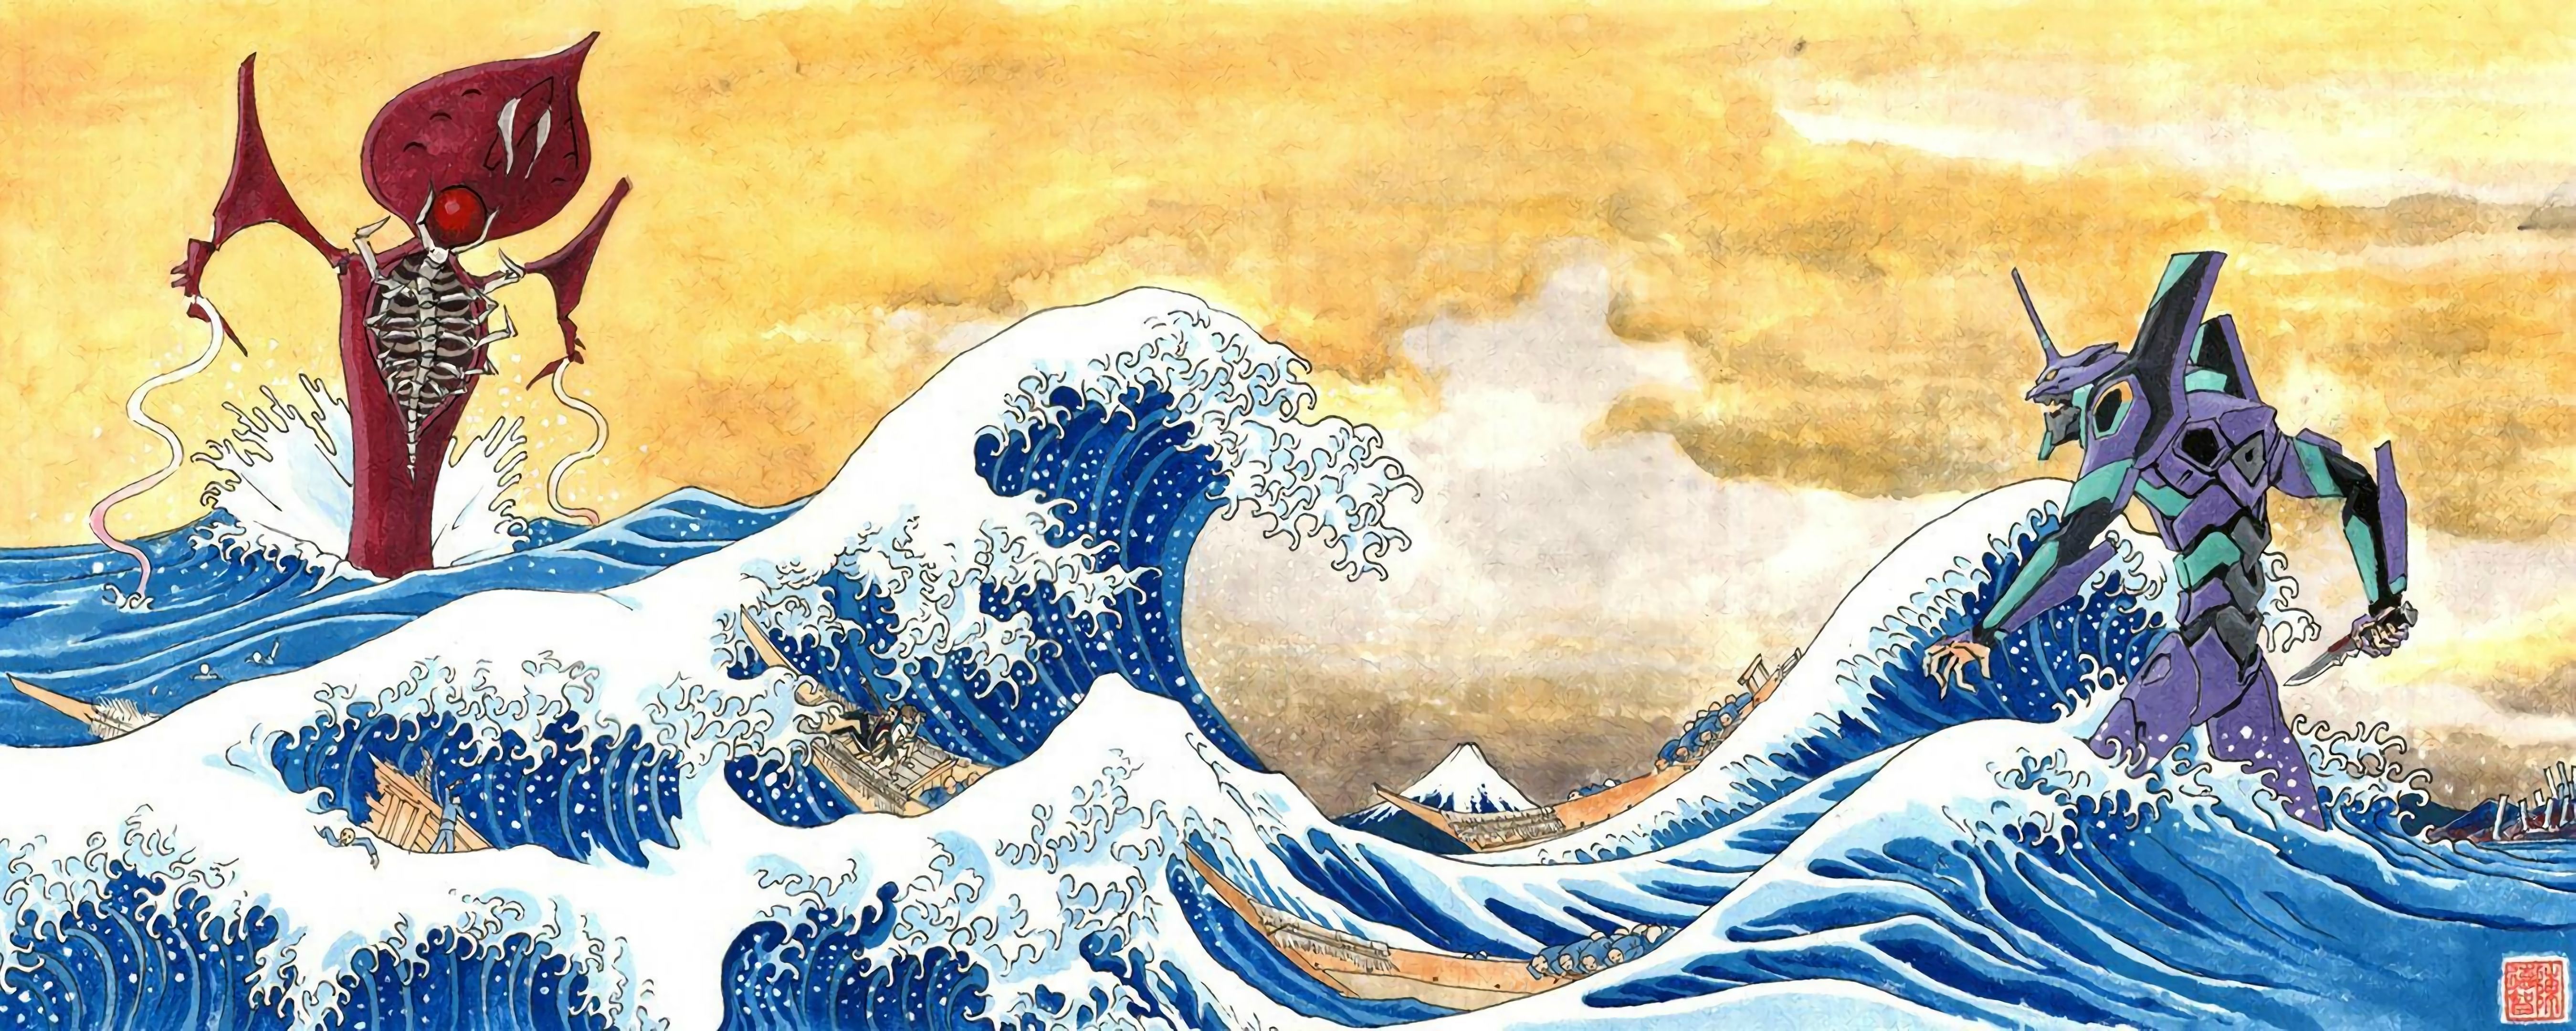 The Great Wave Of Kanagawa By Hokusai Painting Isle Of Dogs Wallpaper   Wallpaperforu